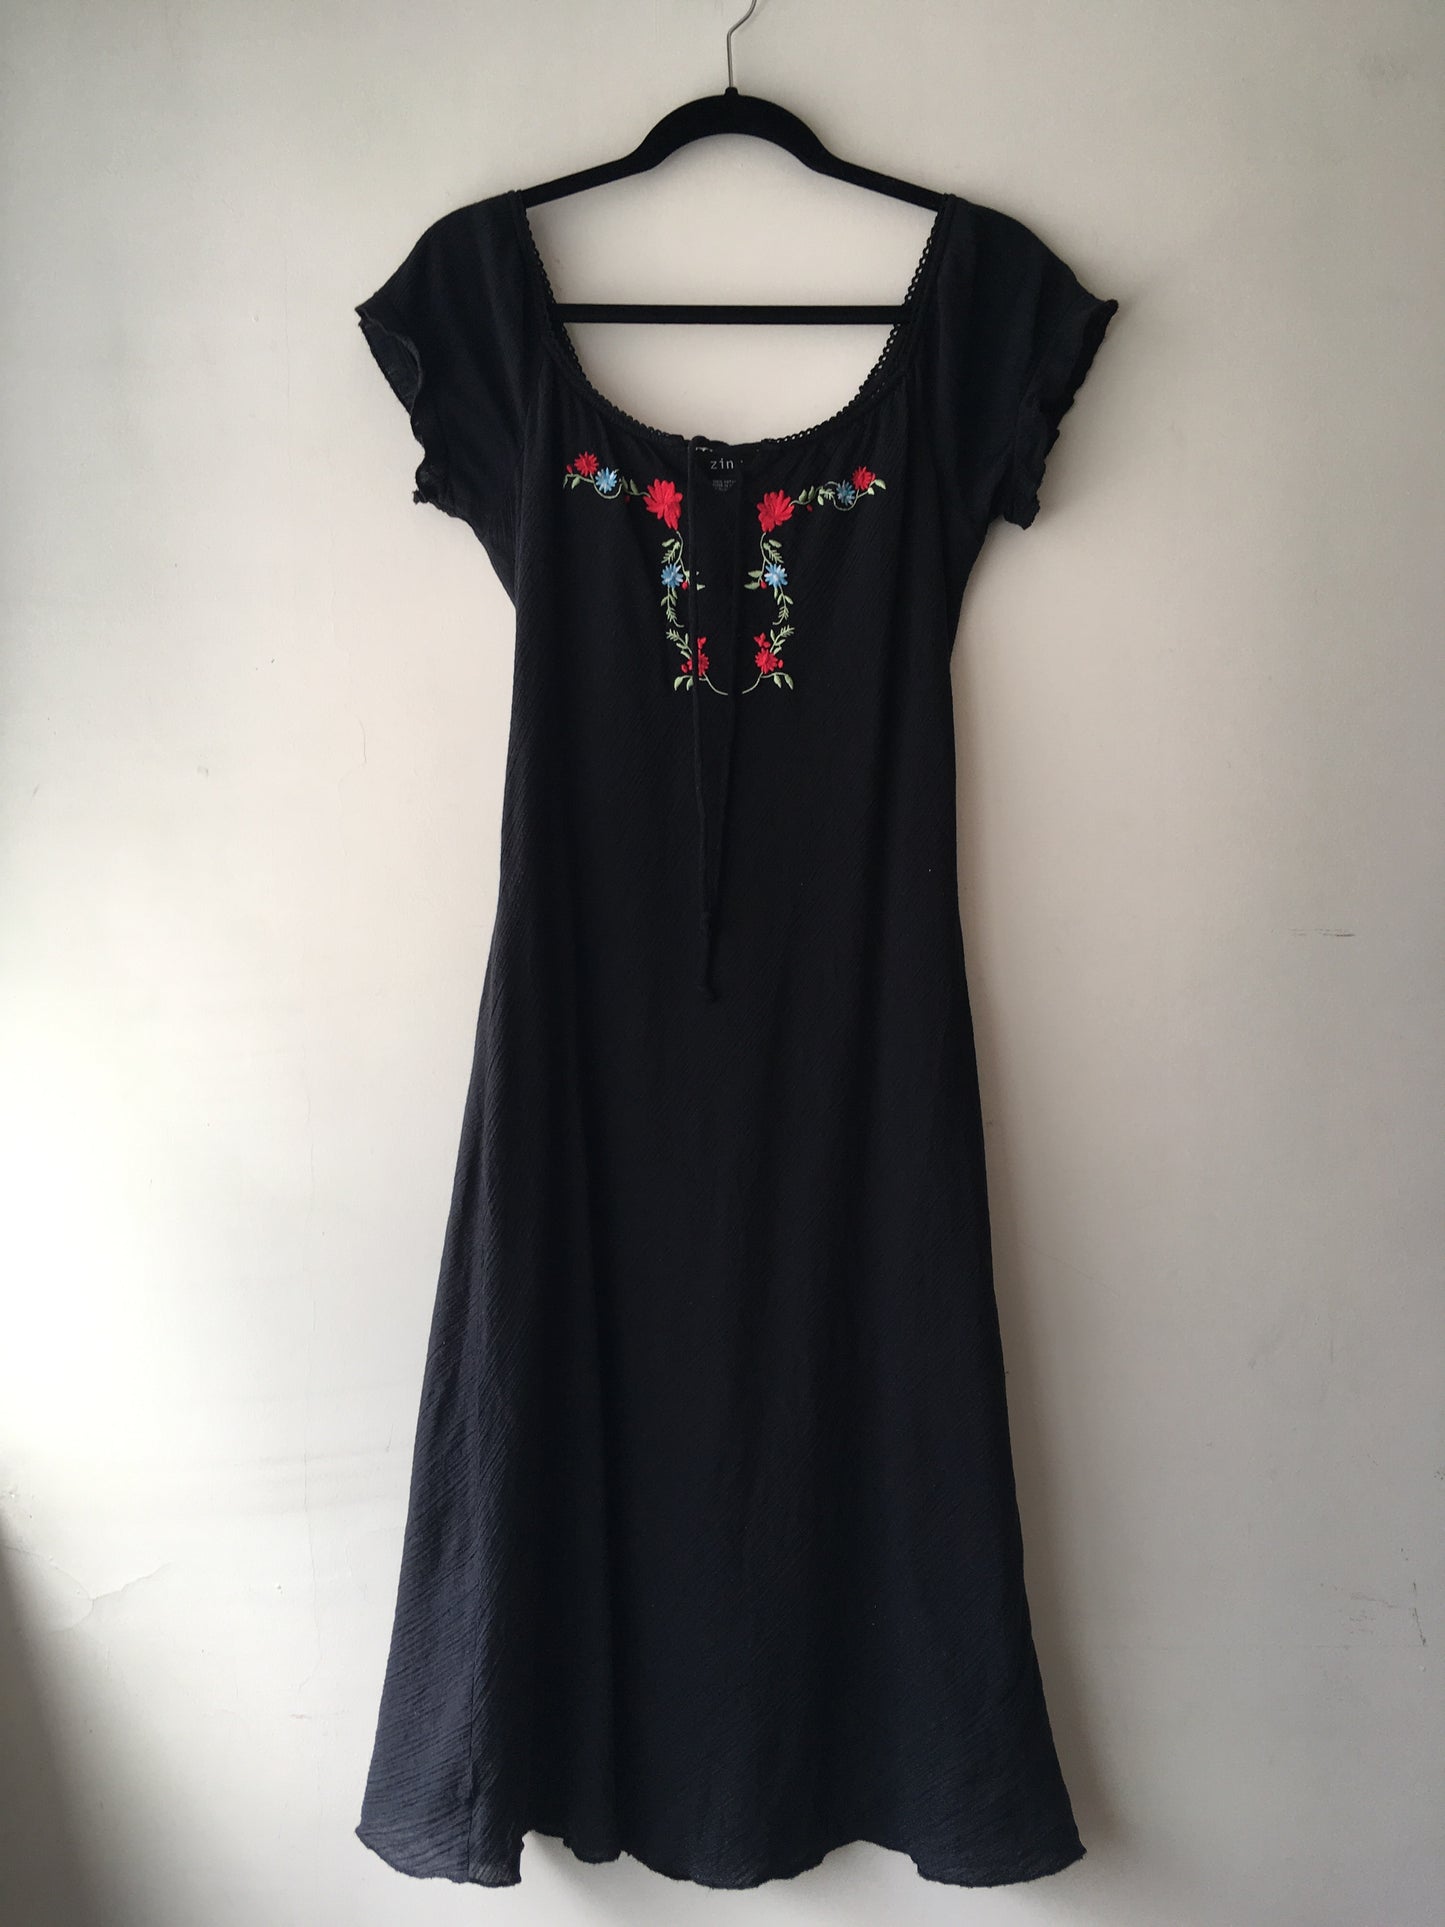 Embroidered Black Dress